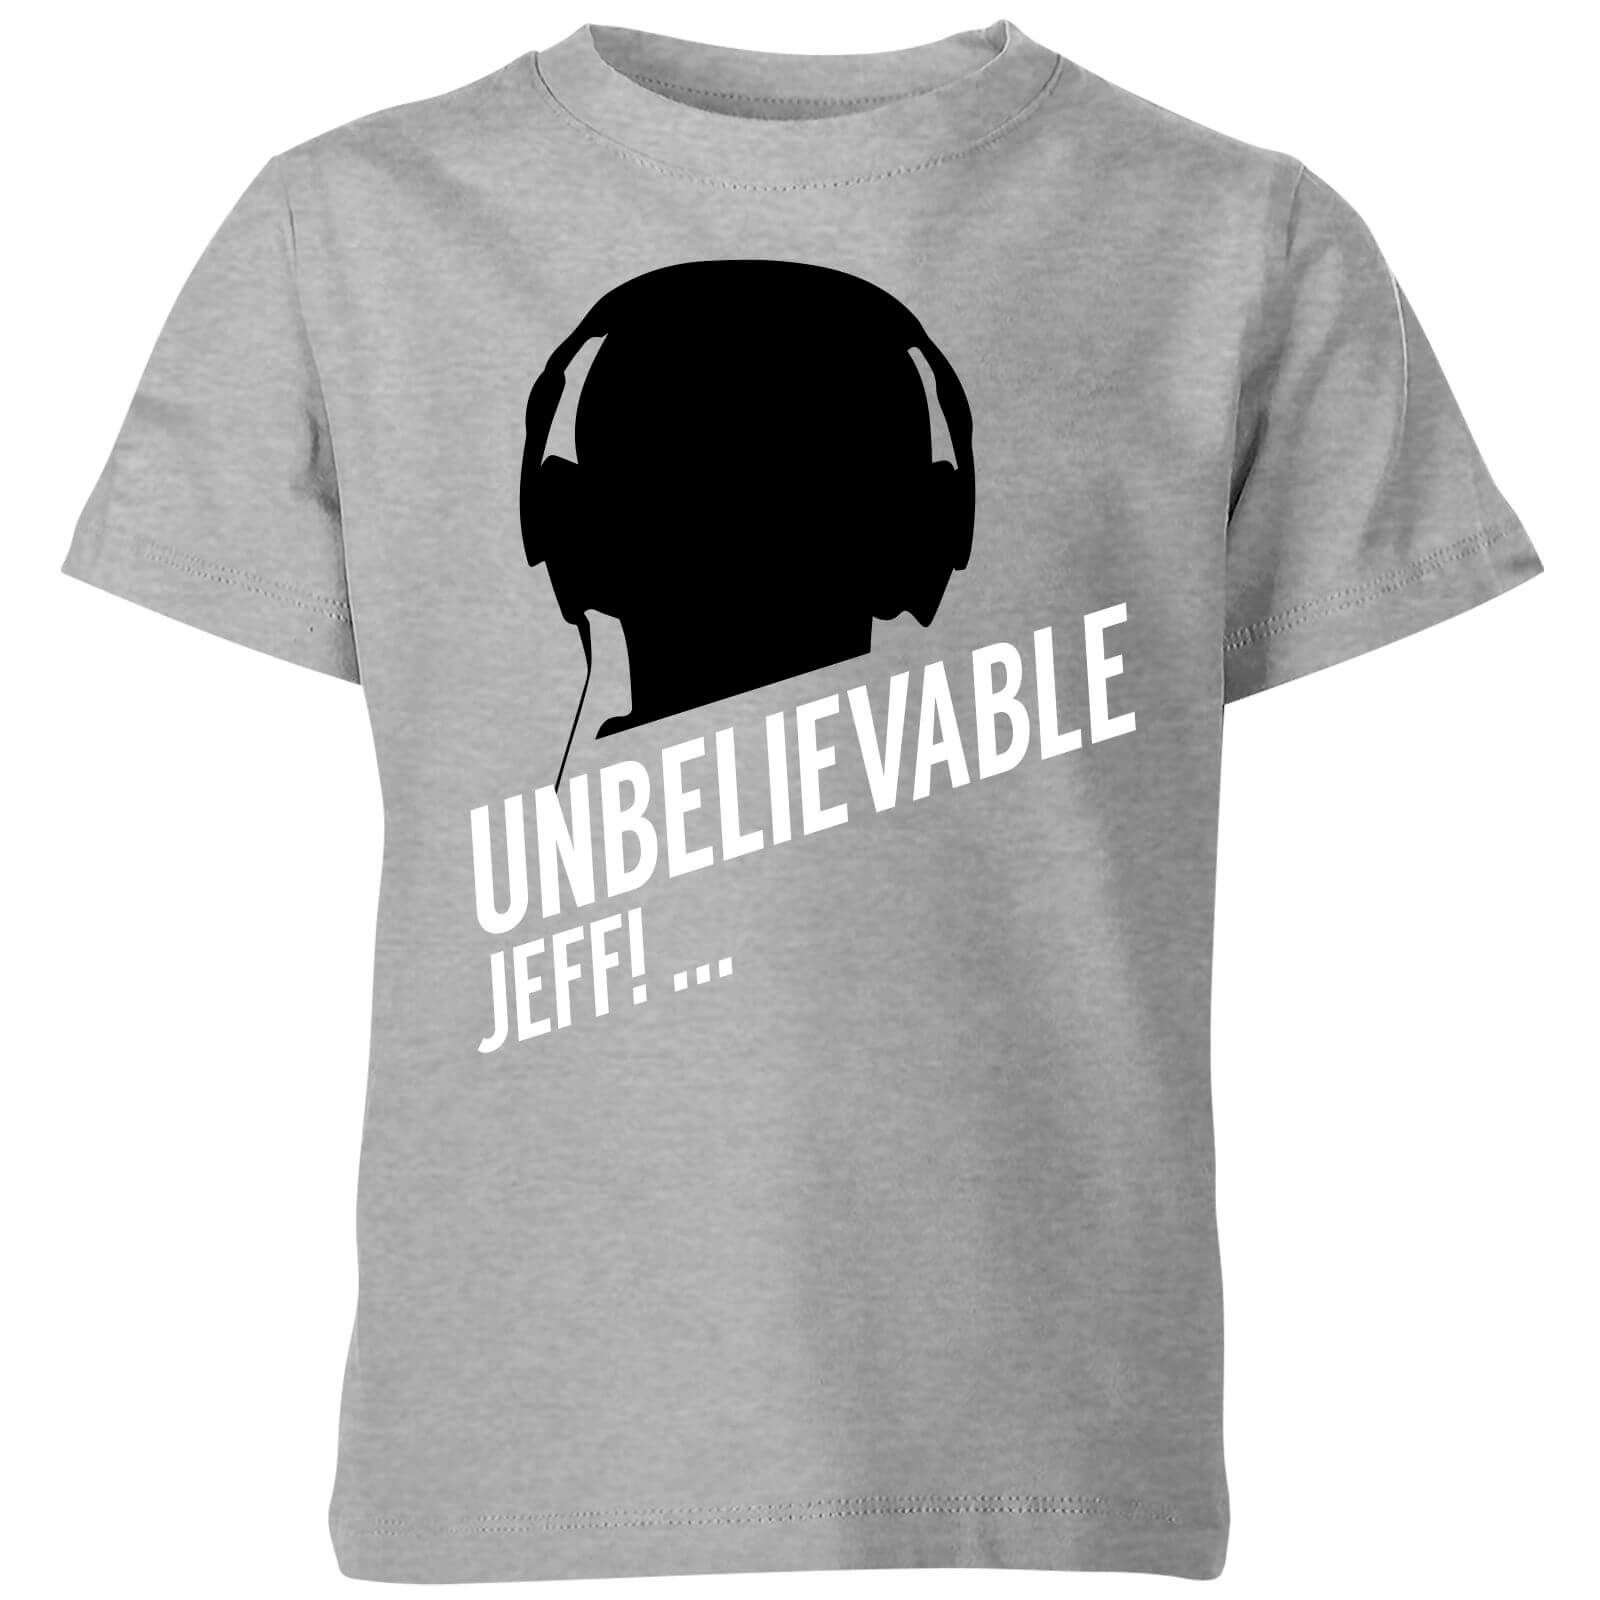 UNBELIEVABLE JEFF! Kids' T-Shirt - Grey - 3-4 Years - Grey